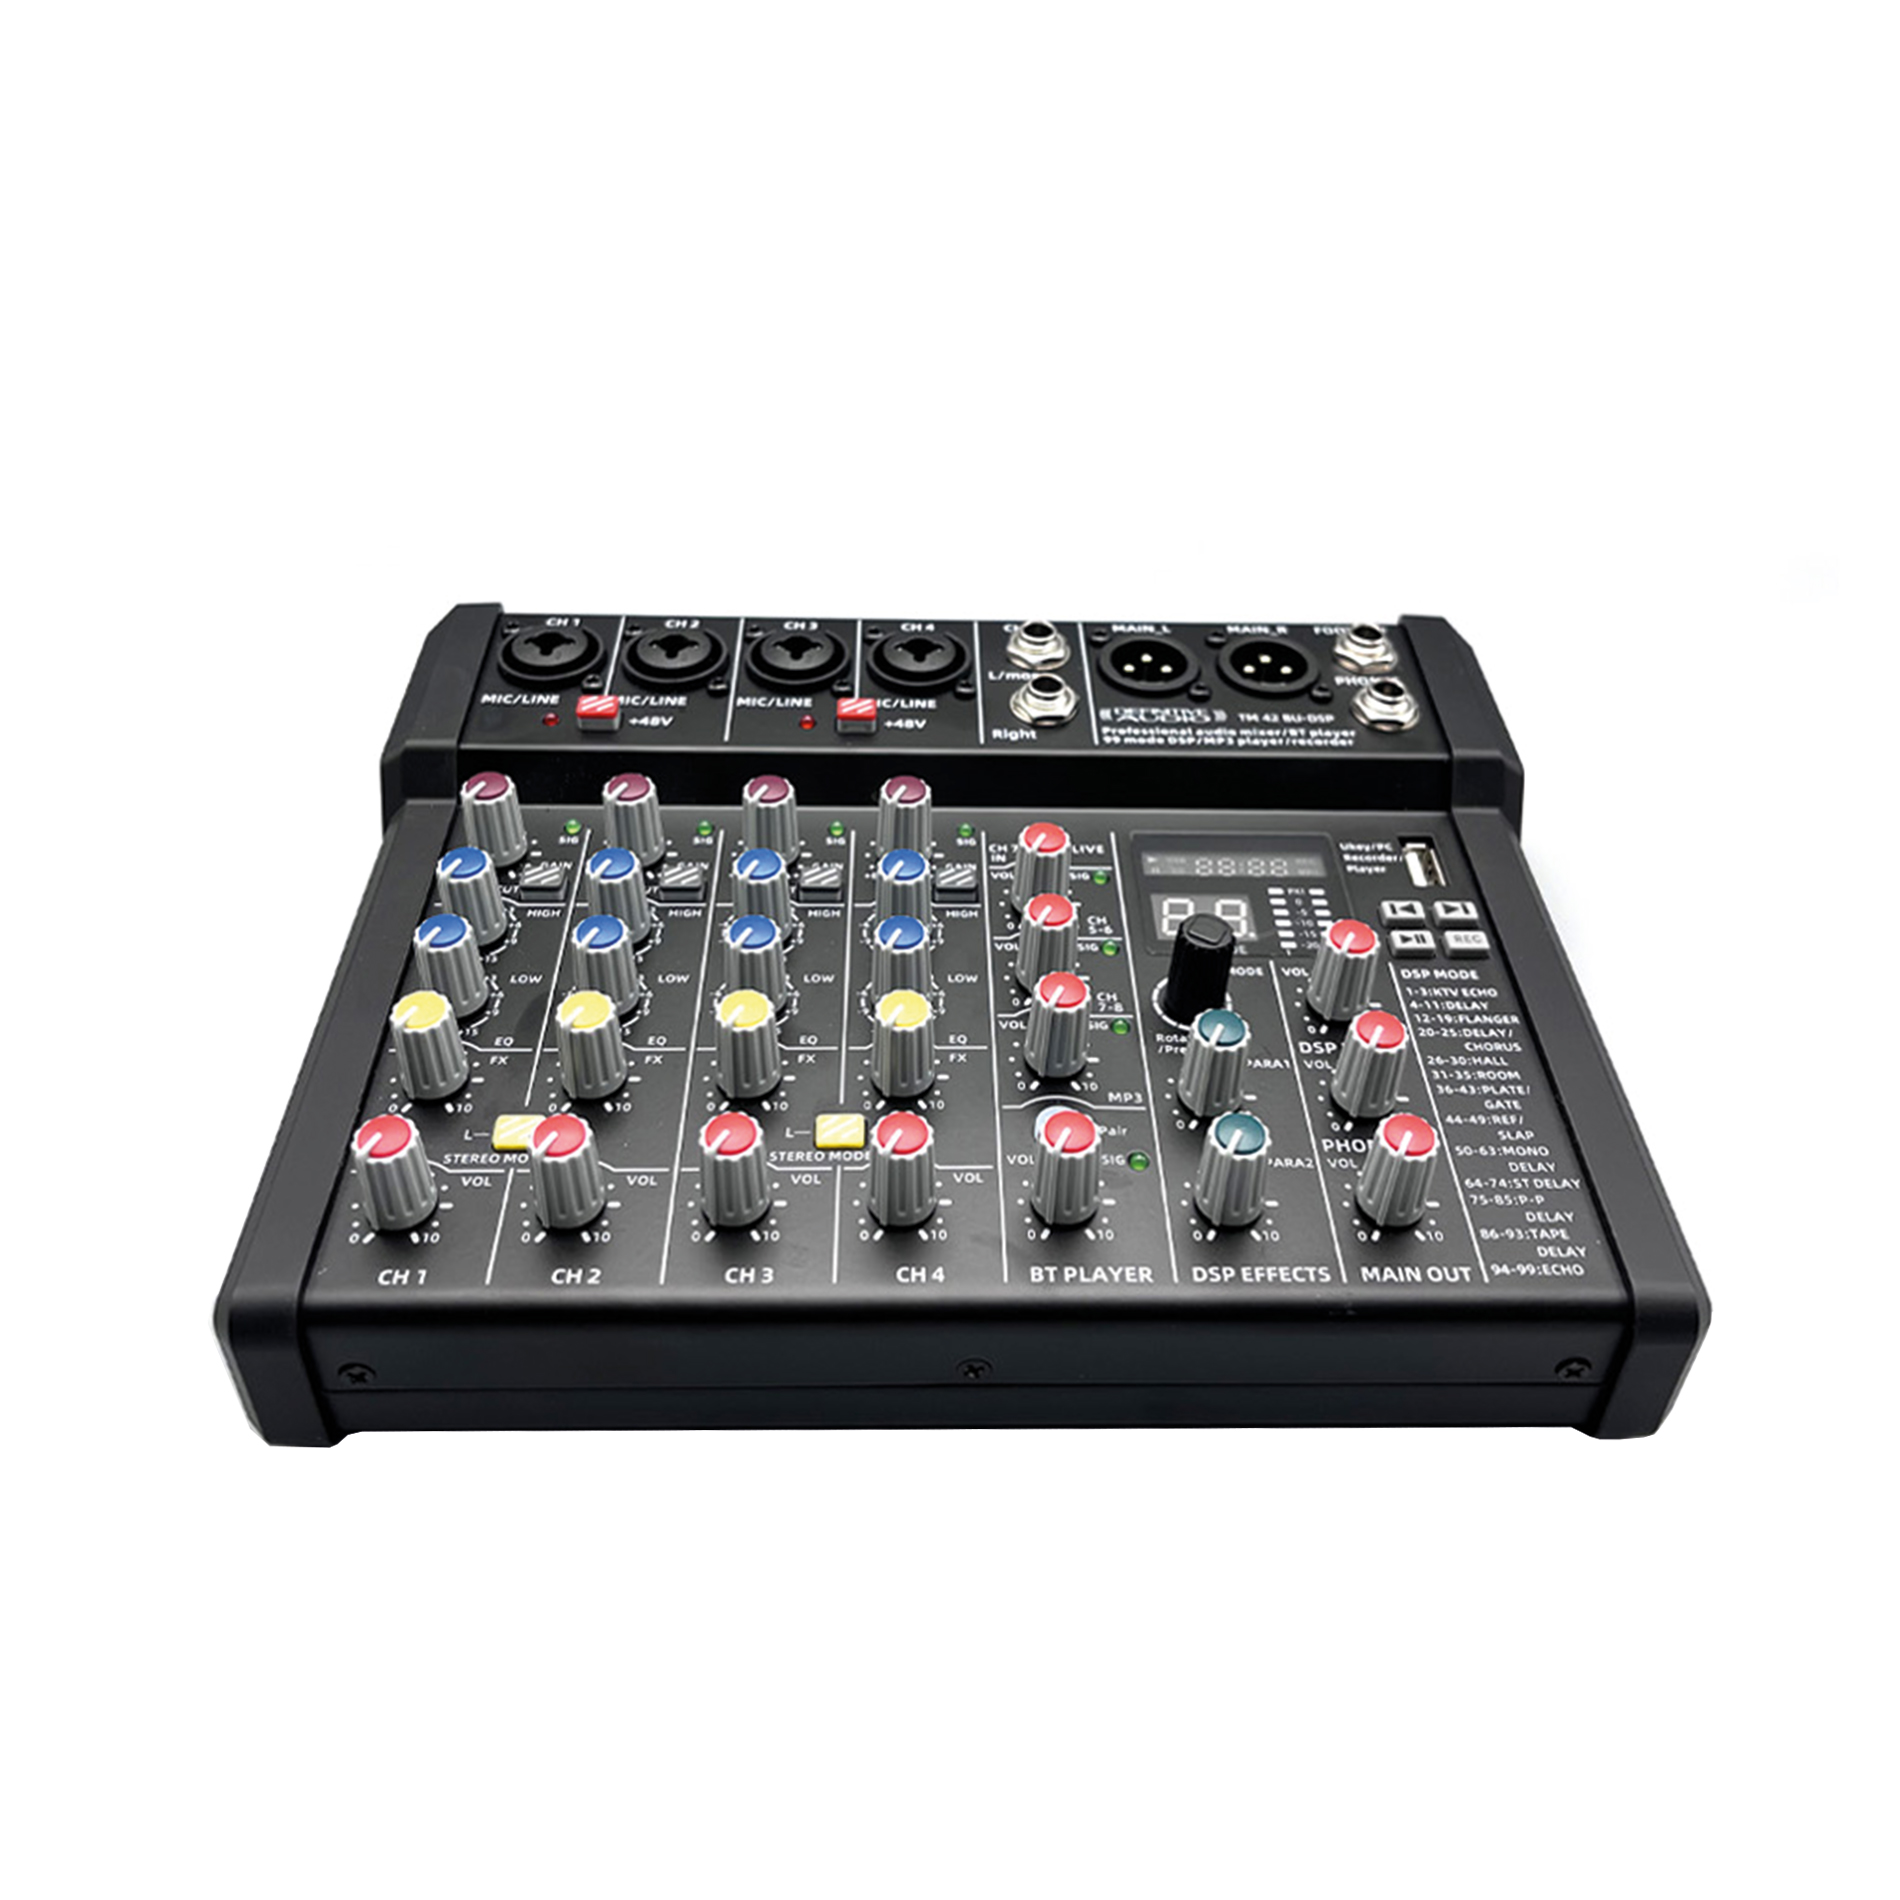 Definitive Audio Tm 42 Bu-dsp - Analog mixing desk - Variation 1